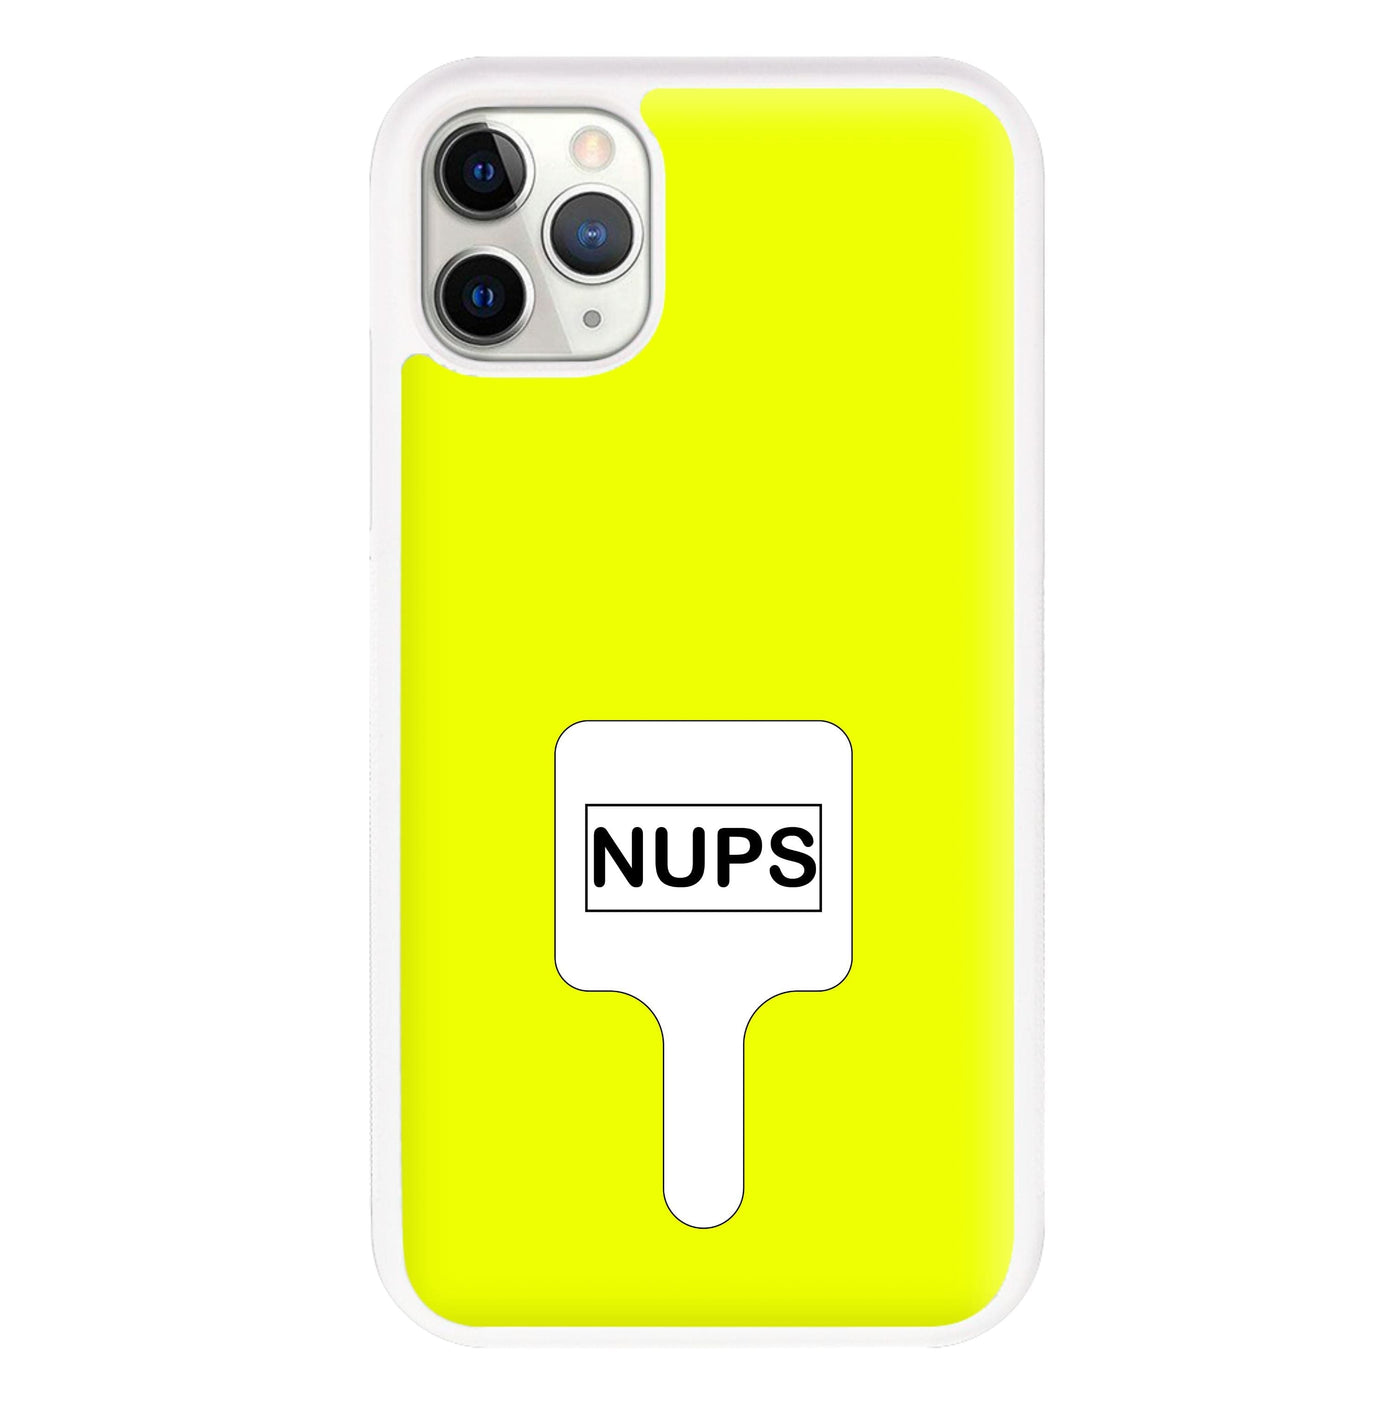 Nups - Brooklyn Nine-Nine Phone Case